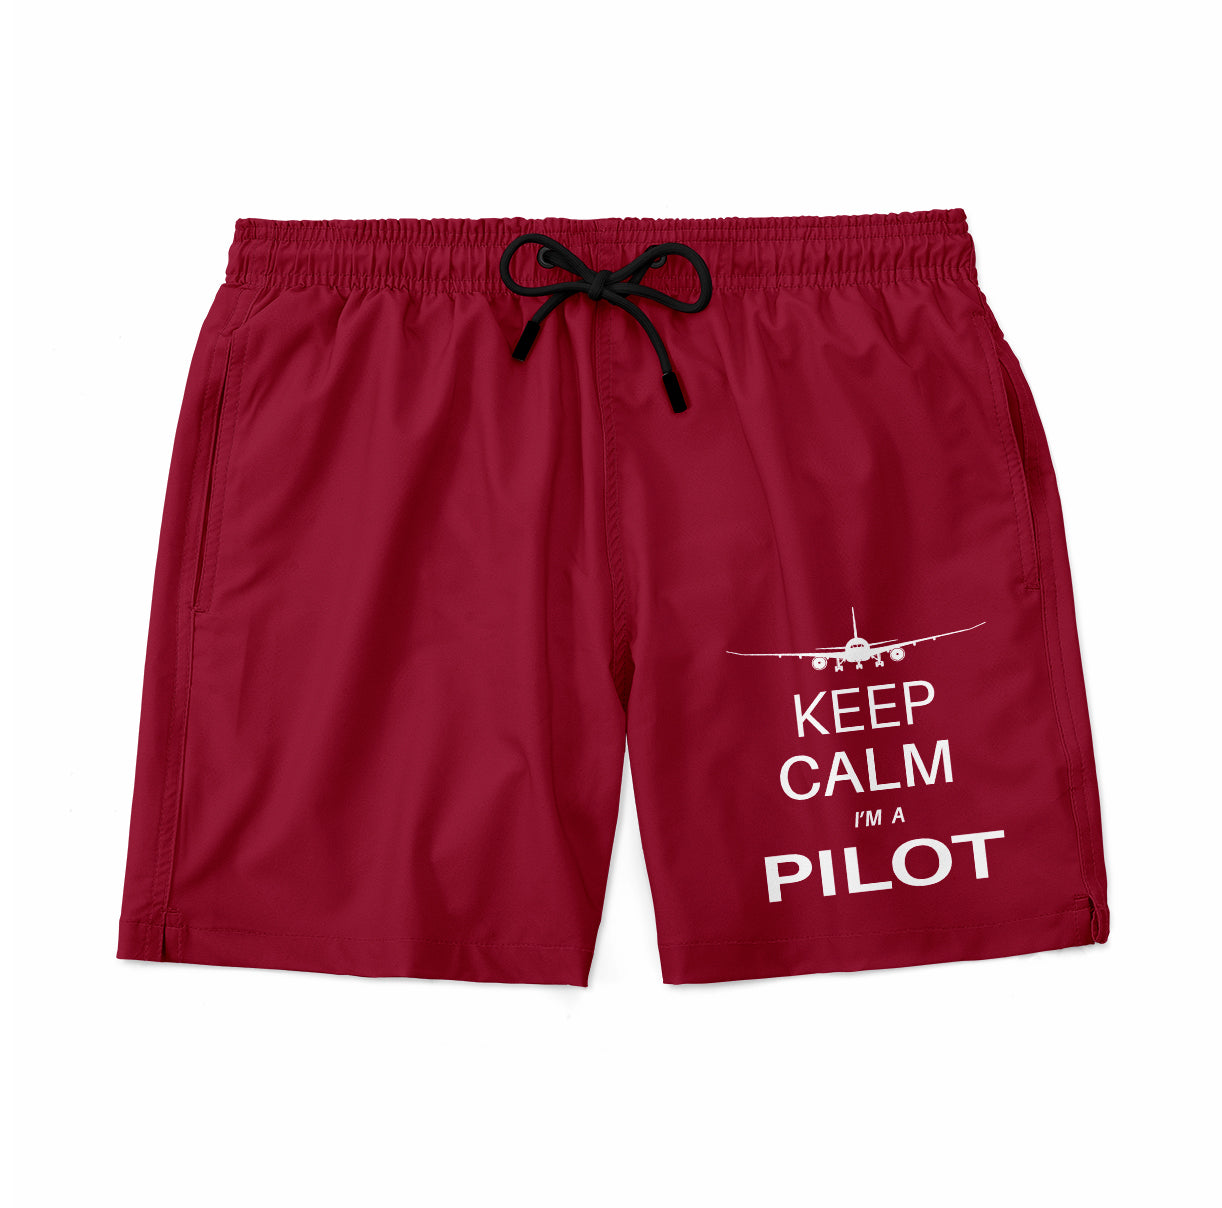 Pilot (777 Silhouette) Designed Swim Trunks & Shorts